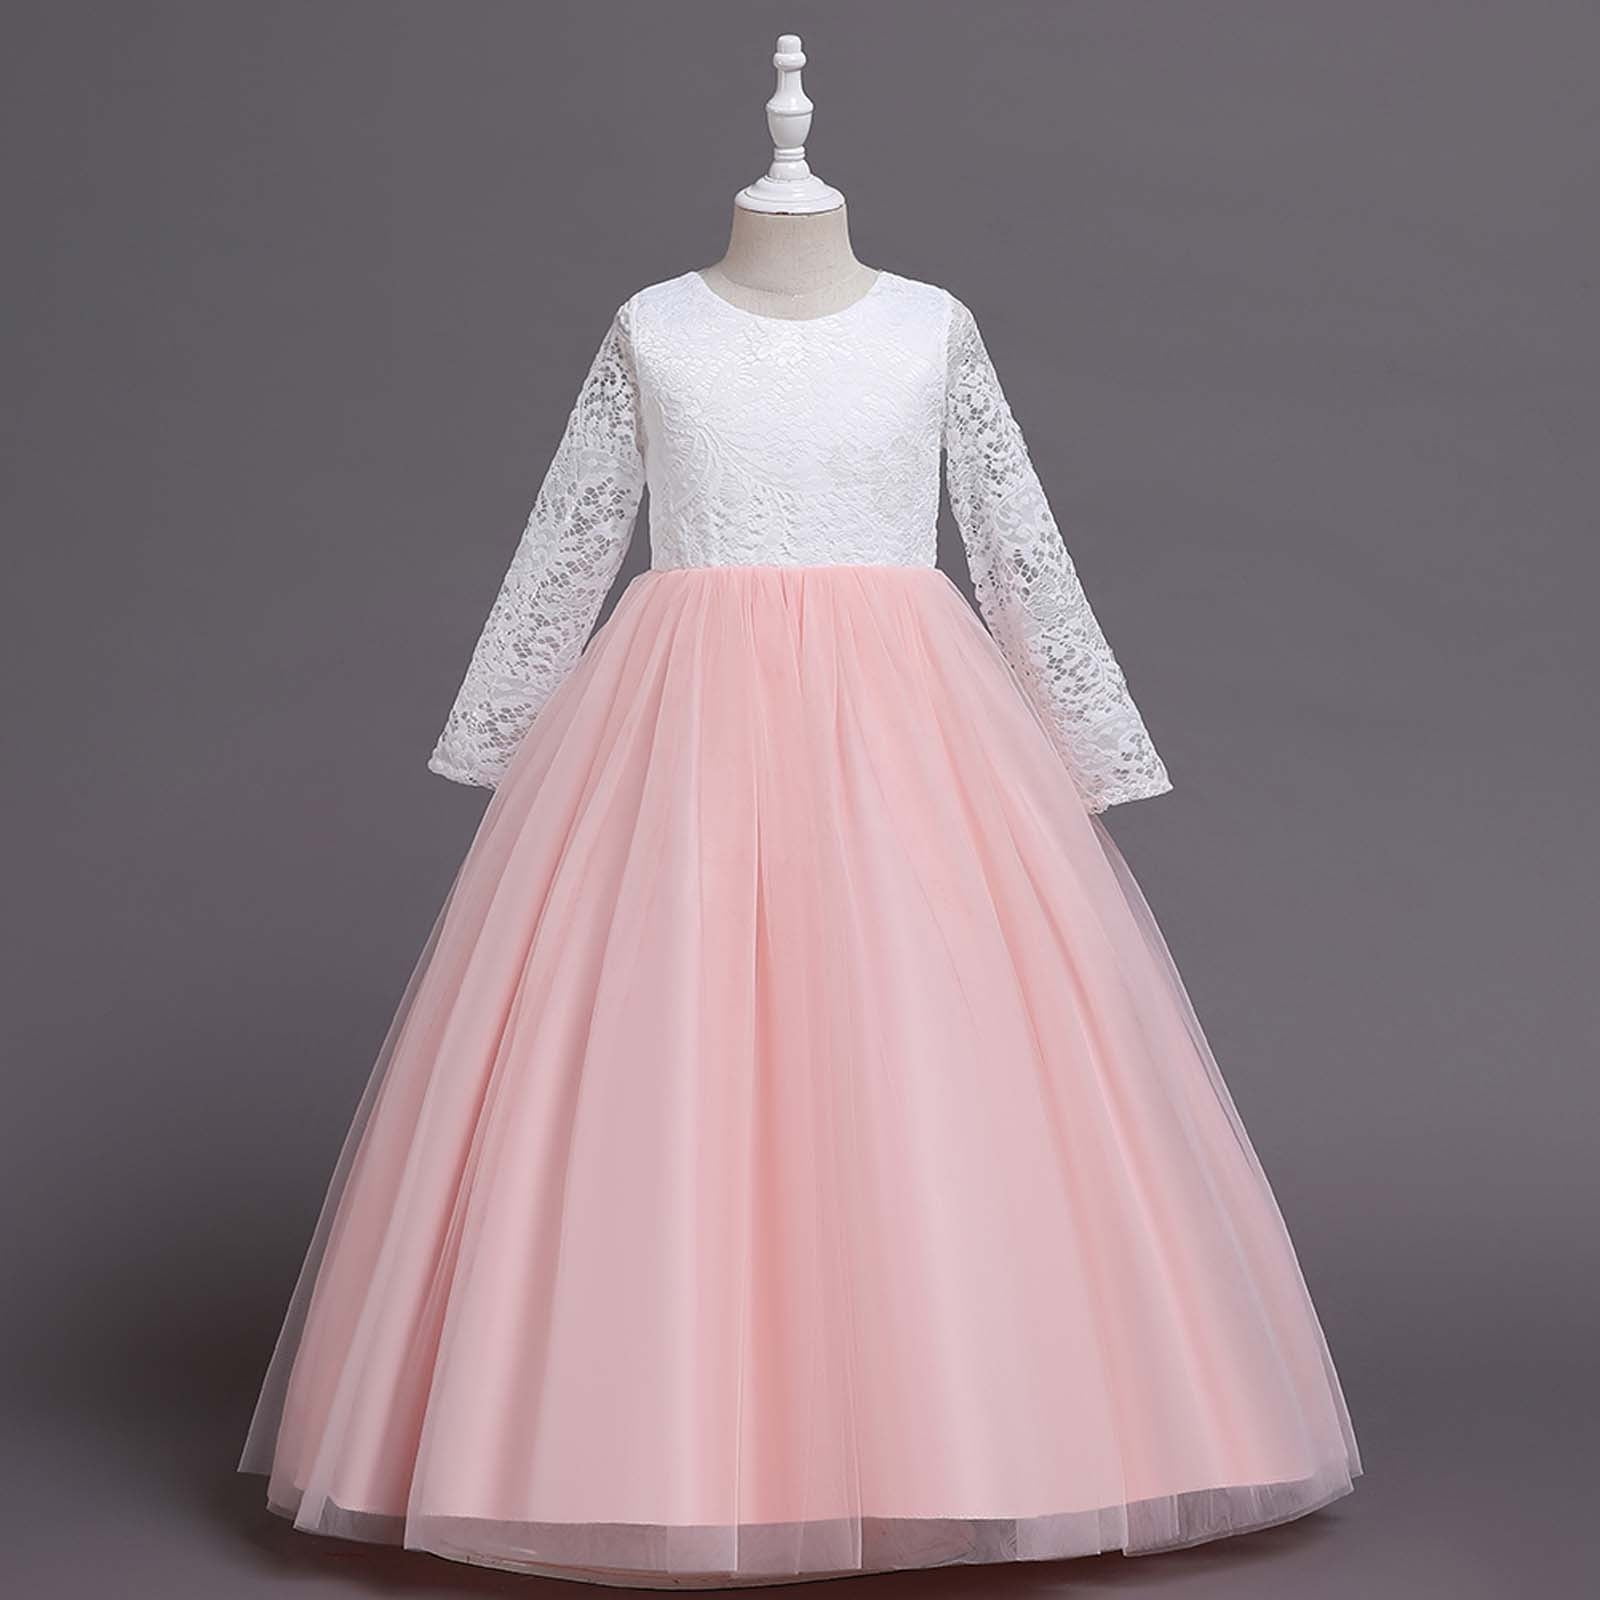 Gorgeous Princess Frock Design Ideas for Girls Wedding & Party Wear frock  Design | Bridal shower dress, Bridal shower outfit, Wedding dresses for  girls